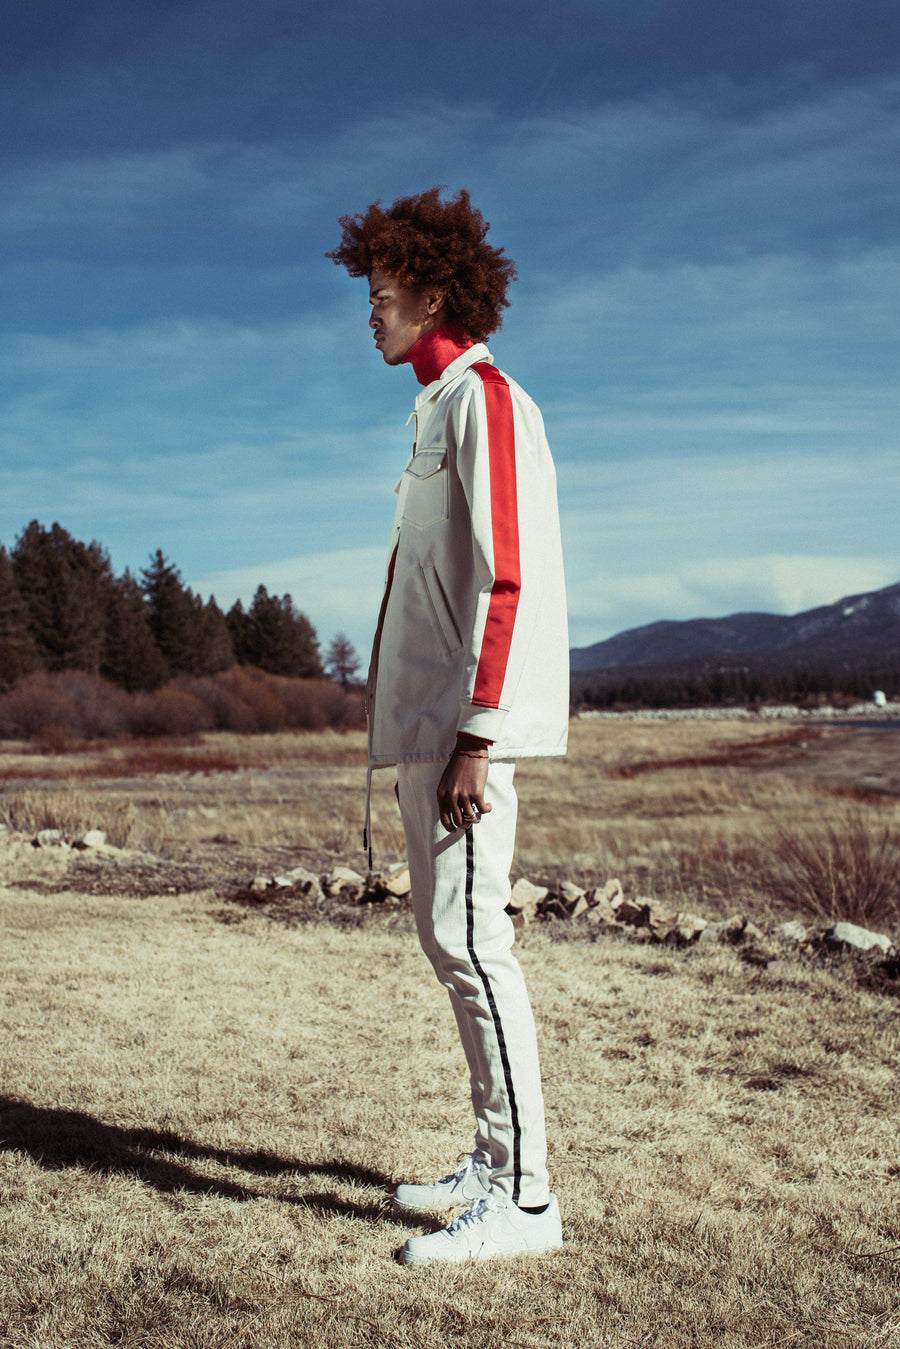 Konus Men's Bonded Fabric Coaches Jacket in White - shopatkonus